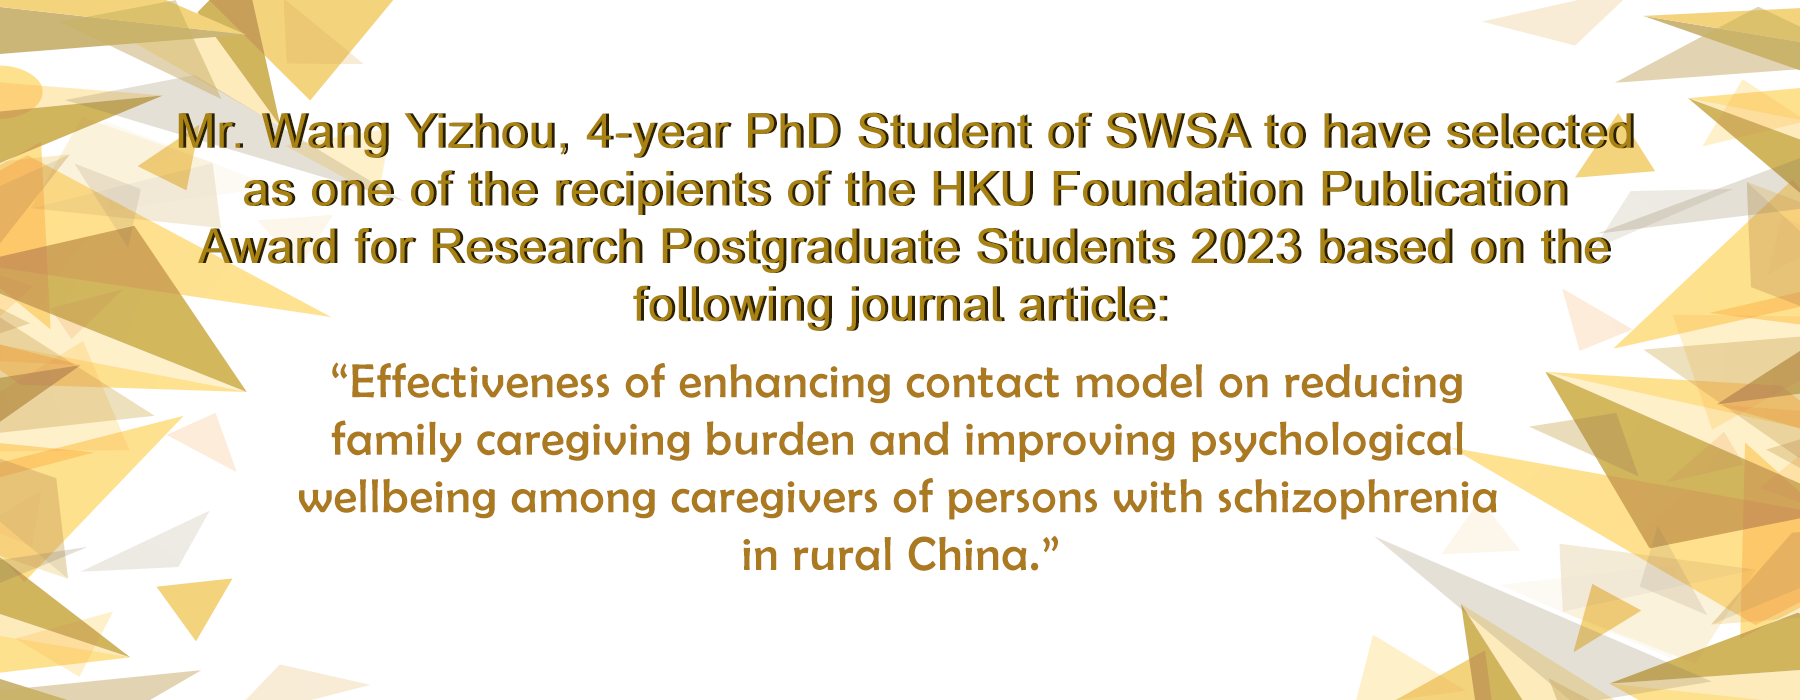 Wang Yizhou - HKU Foundation Publication Award for Research Postgraduate Students 2023